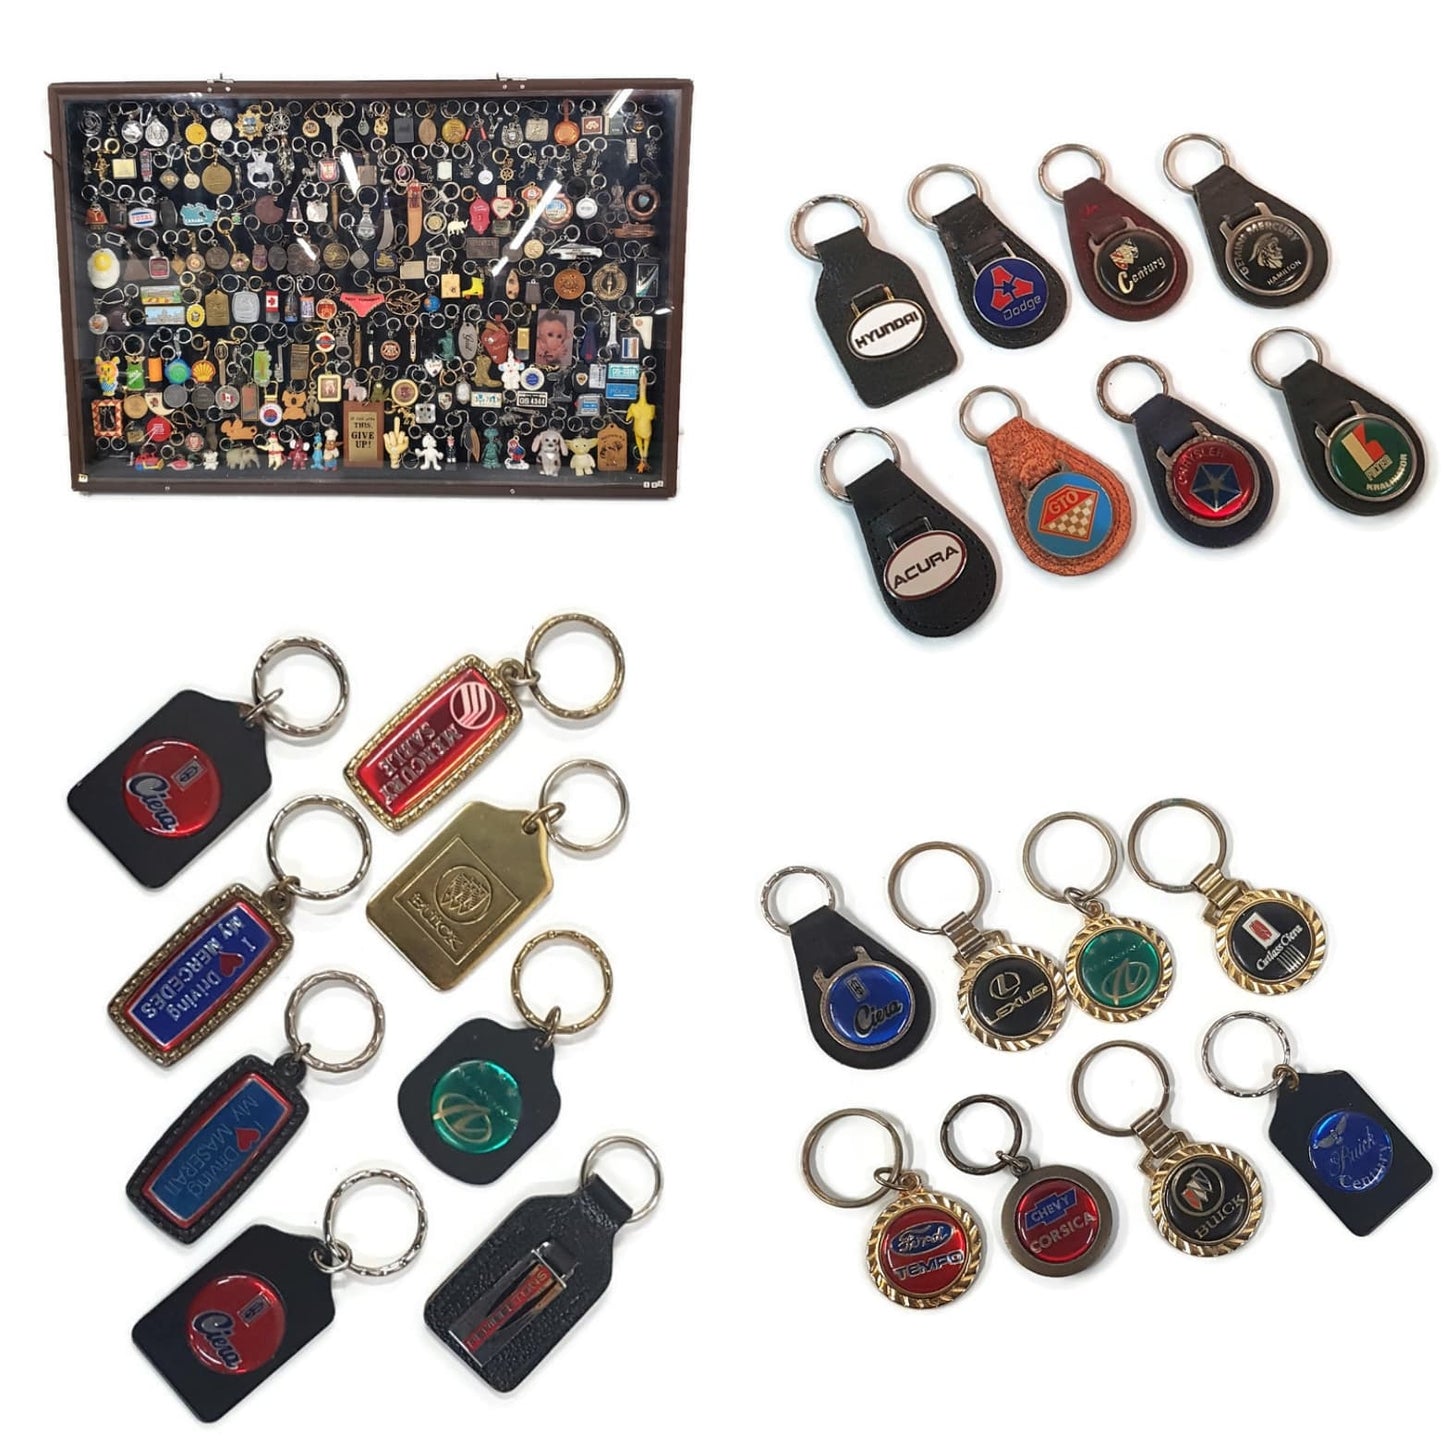 desoto automotive keychain vintage car collectible